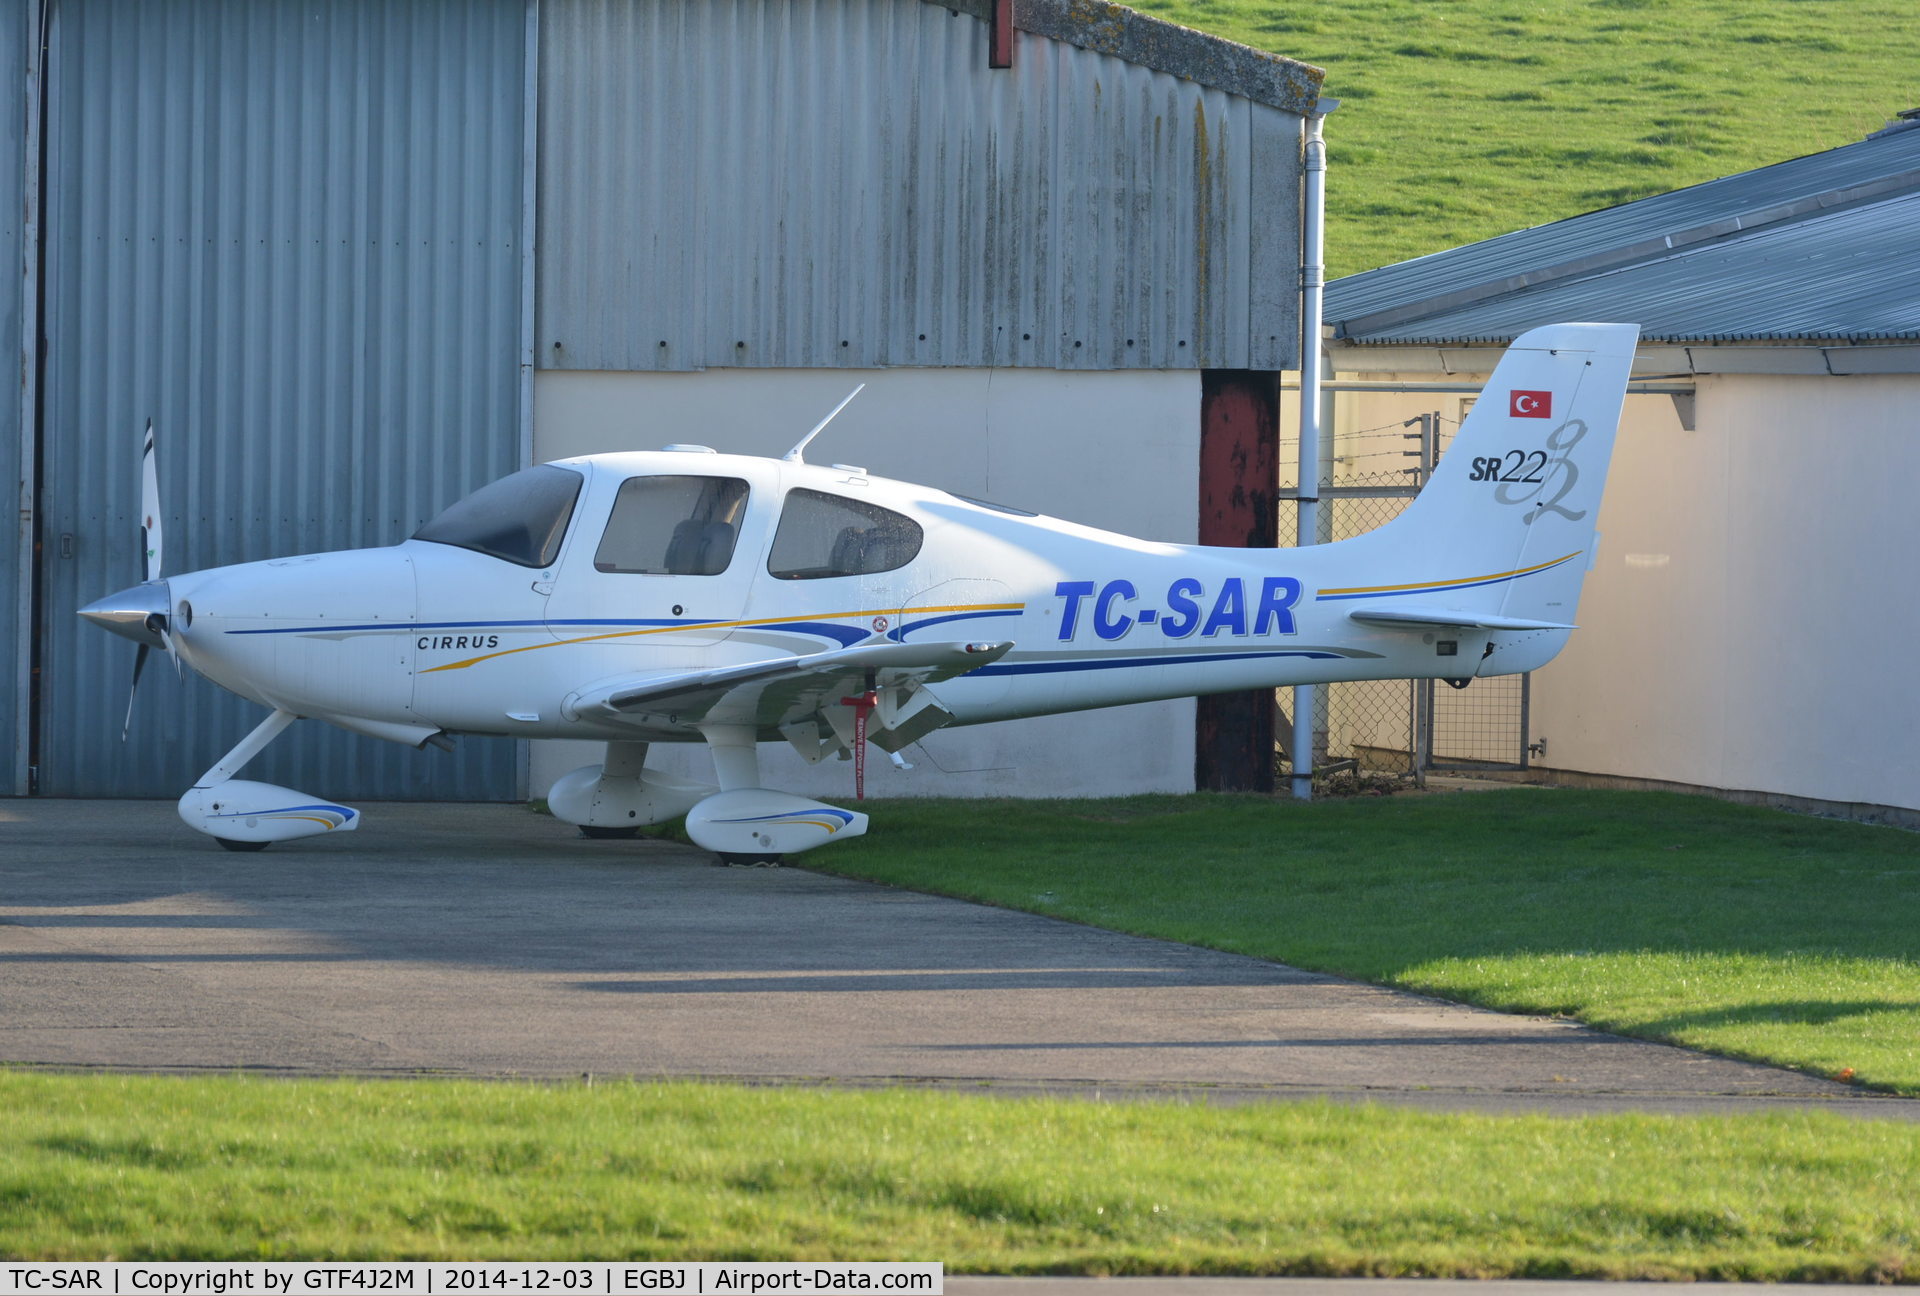 TC-SAR, 2004 Cirrus SR22 G2 C/N 1171, TC-SAR at Staverton 3.12.14